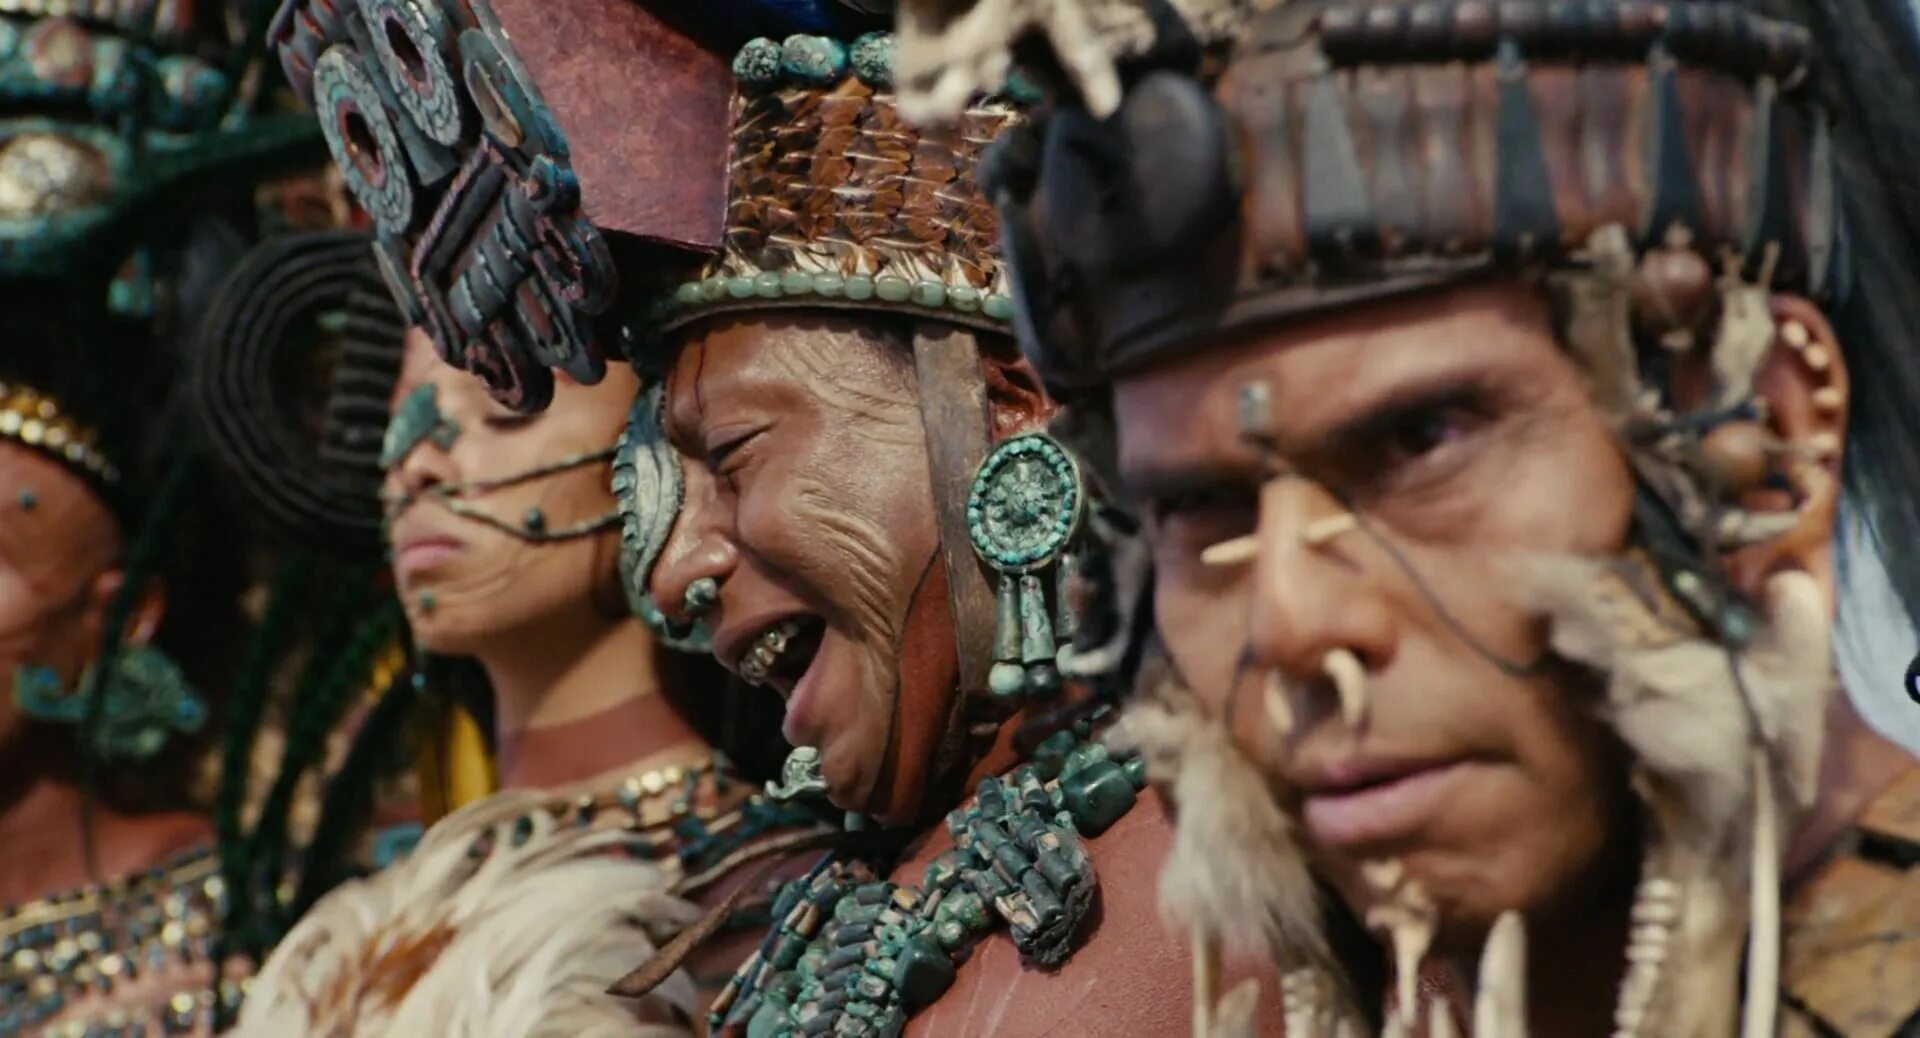 Индейцы Ацтеки инки Майя. Индейцы Майя вождь. Майя индейцы древней Америки. Индейцы Майя и Ацтеки.